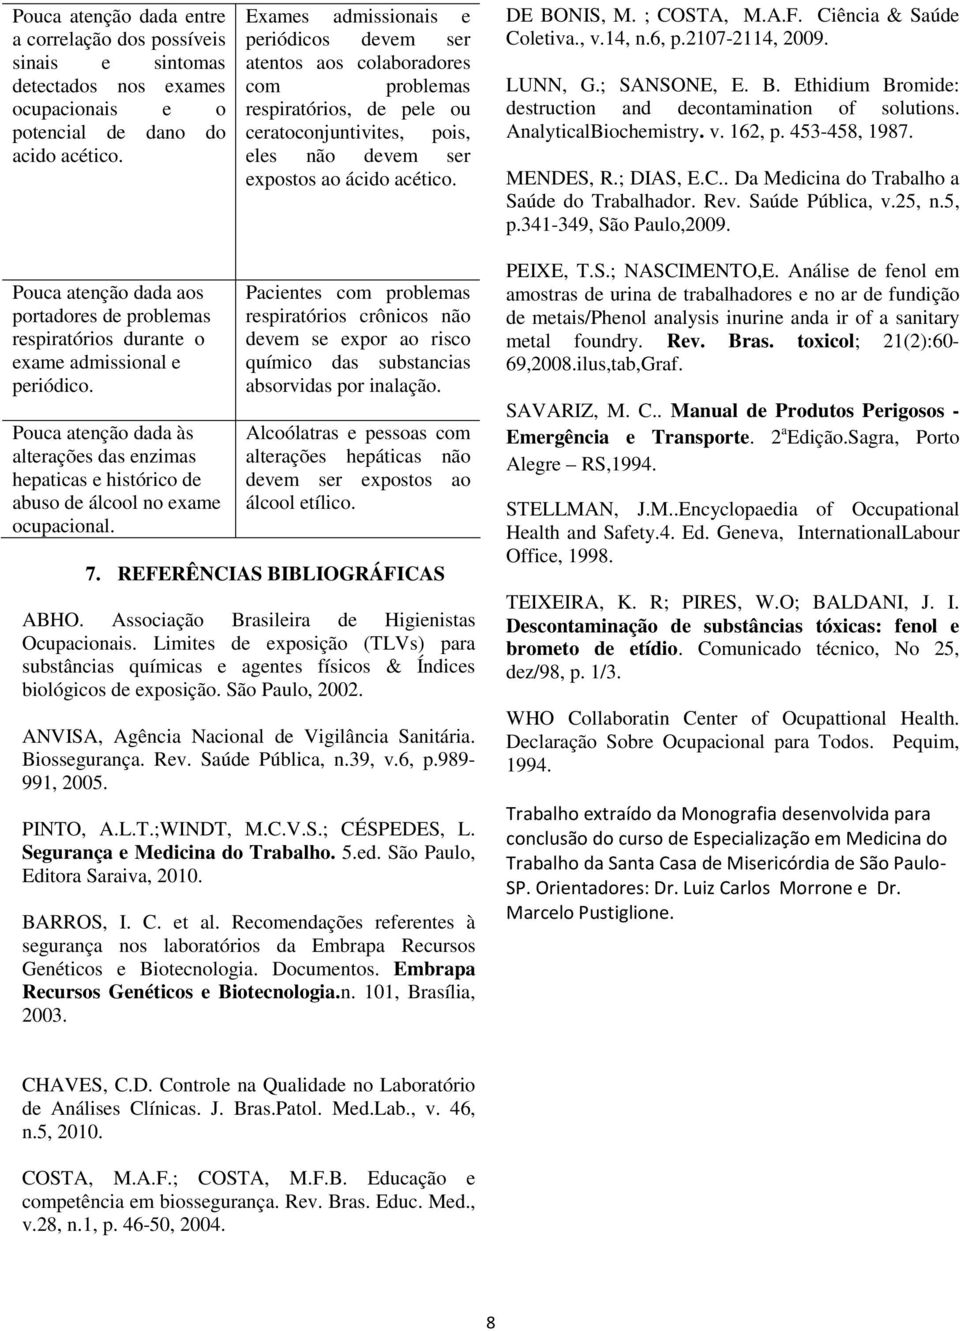 ; COSTA, M.A.F. Ciência & Saúde Coletiva., v.14, n.6, p.2107-2114, 2009. LUNN, G.; SANSONE, E. B. Ethidium Bromide: destruction and decontamination of solutions. AnalyticalBiochemistry. v. 162, p.